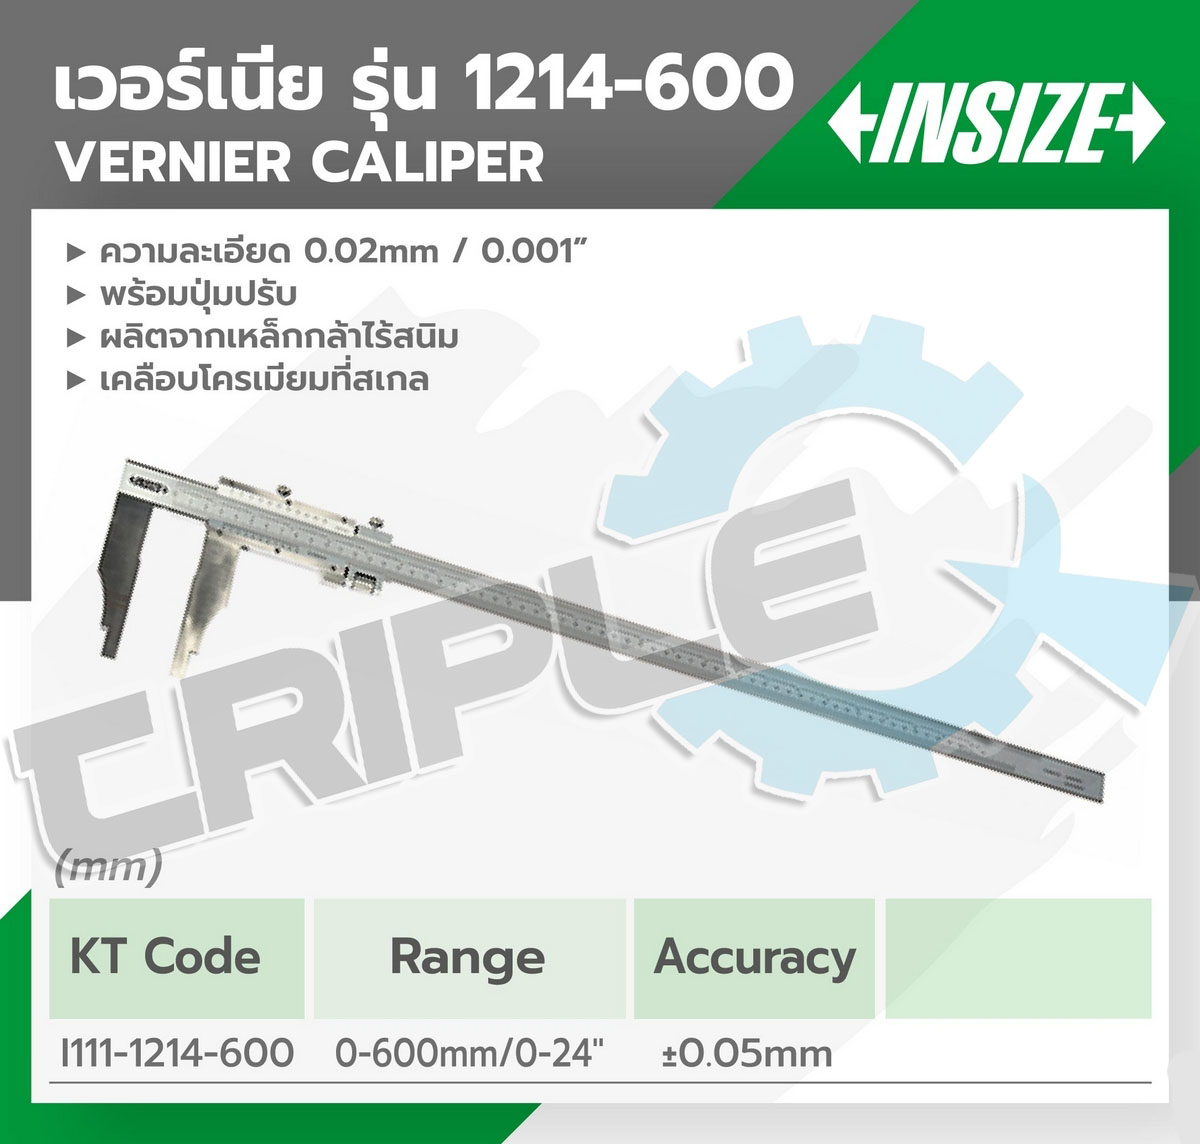 INSIZE - เวอร์เนียร์คาลิเปอร์ Vernier Caliper รุ่น 1214-600 ช่วงระยะวัด 0-600 มม. (0-24 นิ้ว) ความละเอียด 0.02 (0.001 นิ้ว)